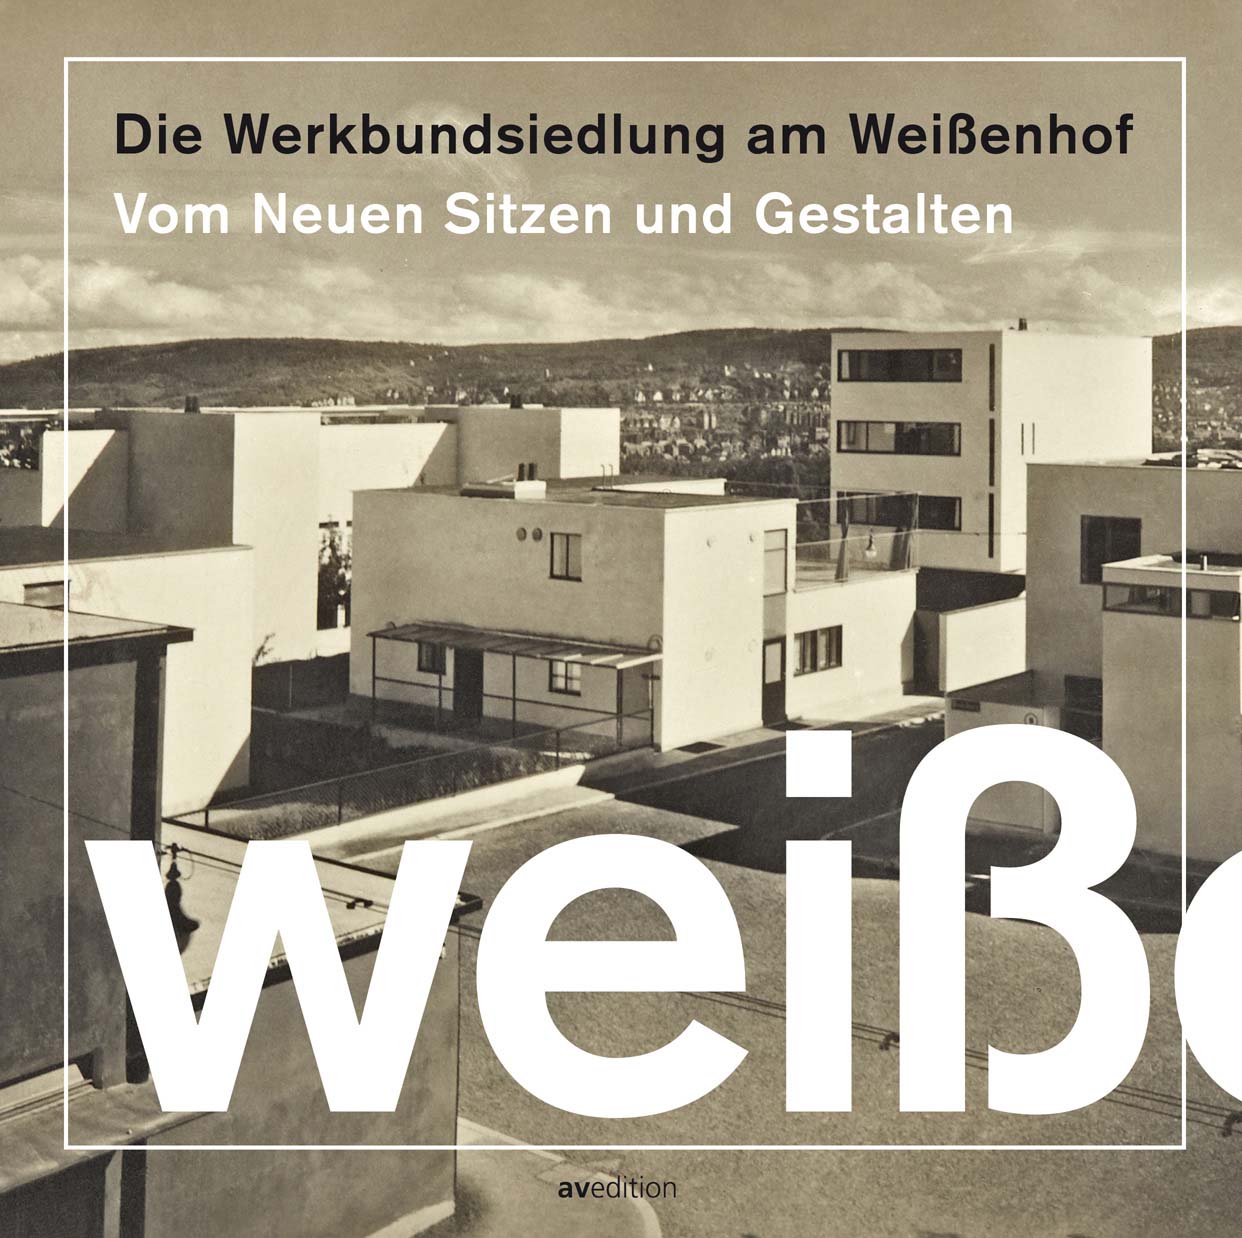 Werkbund Settlement Weissenhof 2 की तस्वीर